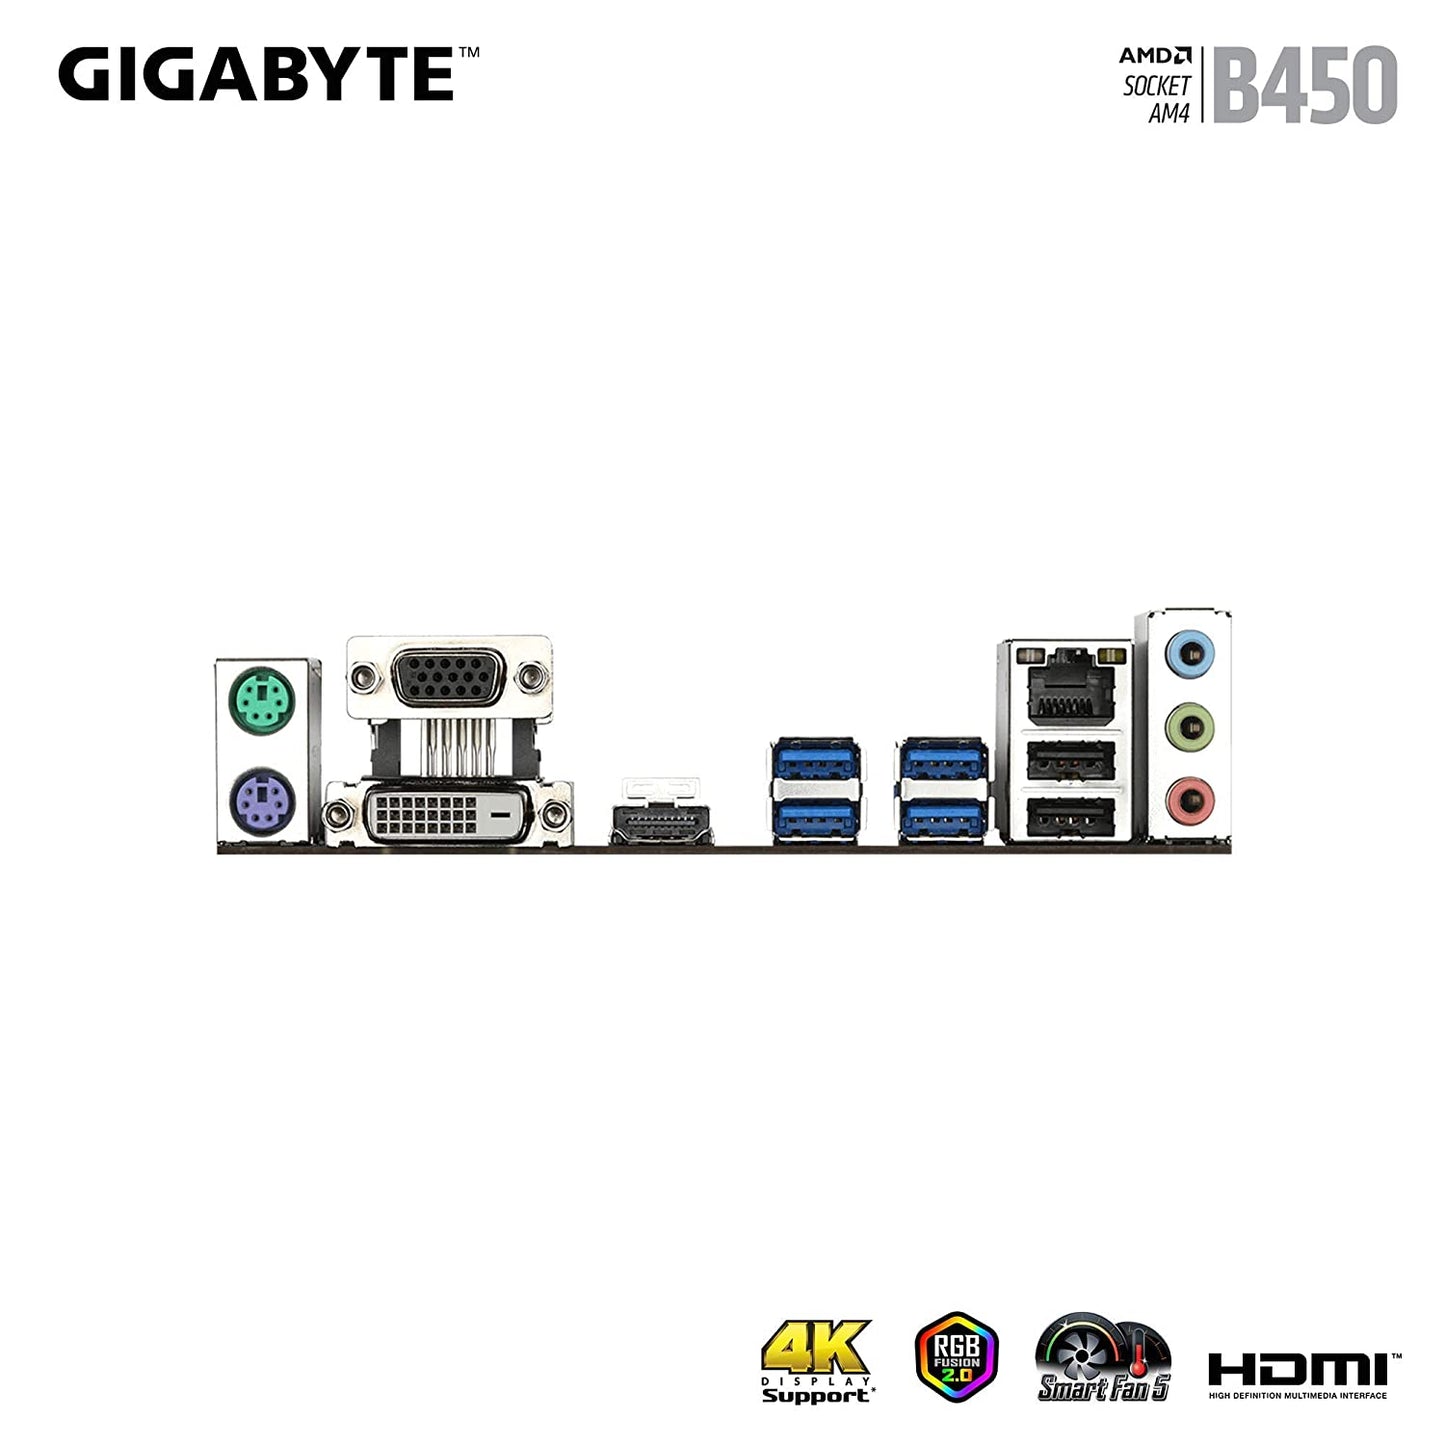 GIGABYTE AMD B450M S2H V2 Ultra Durable Motherboard with Digital VRM Solution, GIGABYTE Gaming LAN and Bandwidth Management, PCIe Gen3 x4 M.2, RGB LED Strip Header